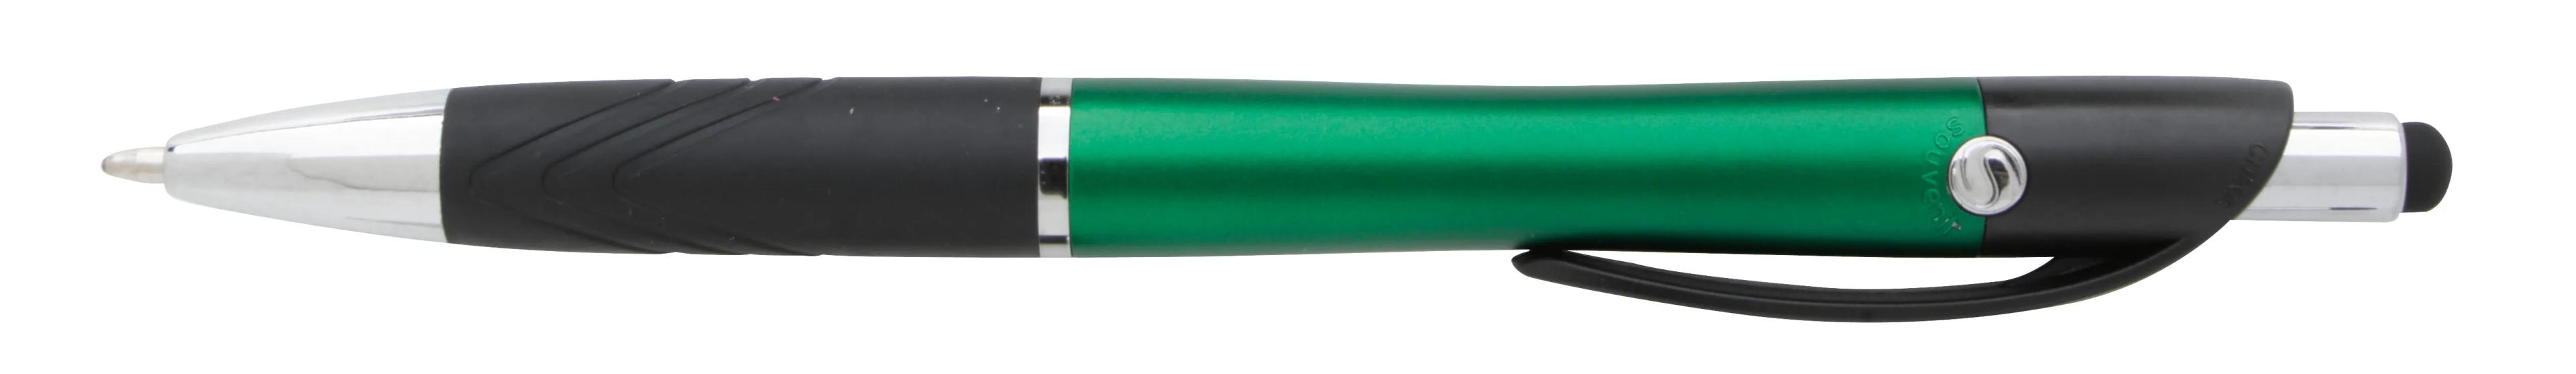 Souvenir® Emblem Stylus Pen 20 of 37